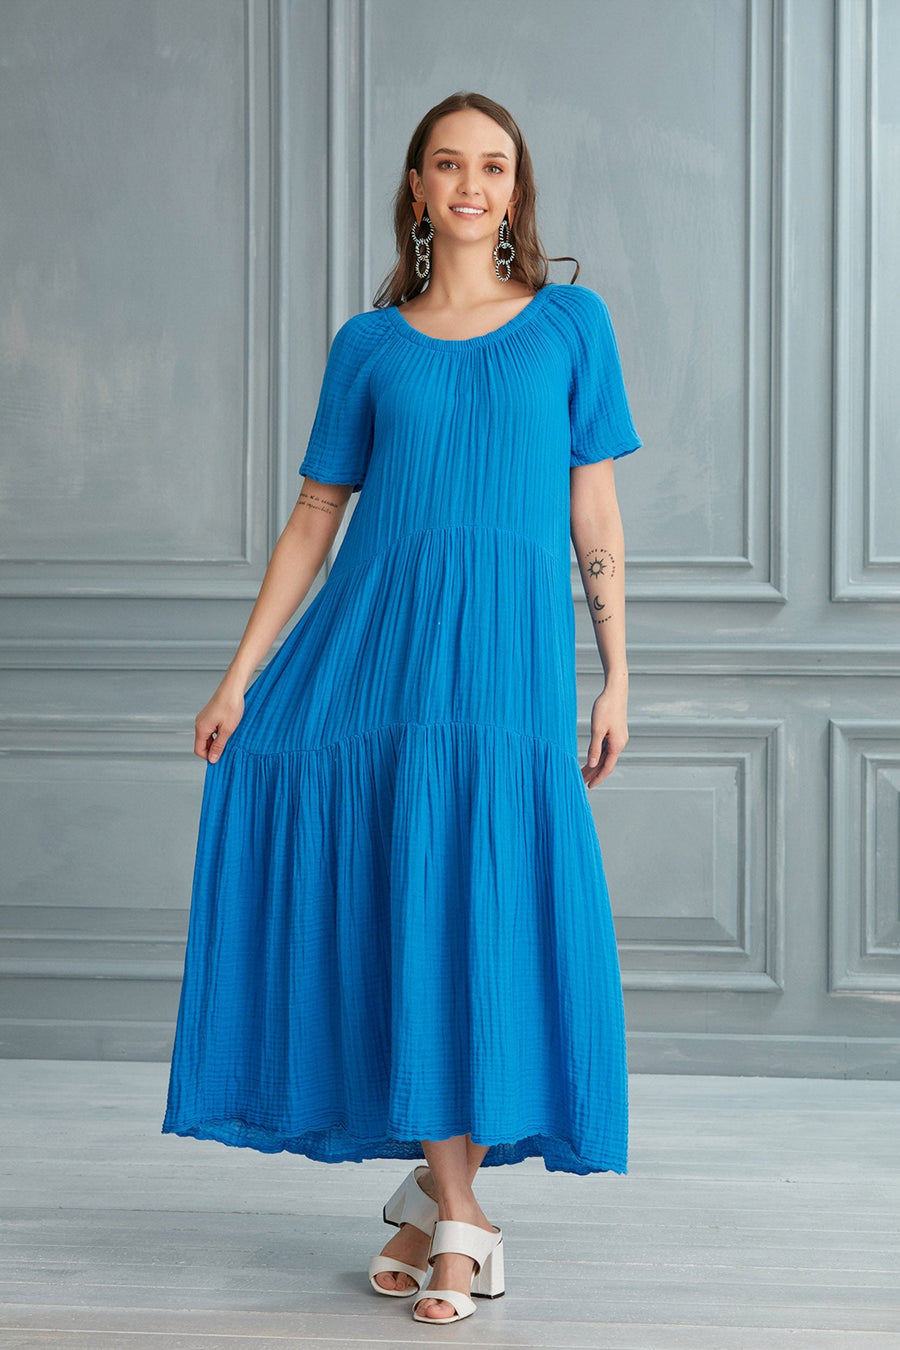 Begonville Elbise Isabella Midi Elbise - Mavi